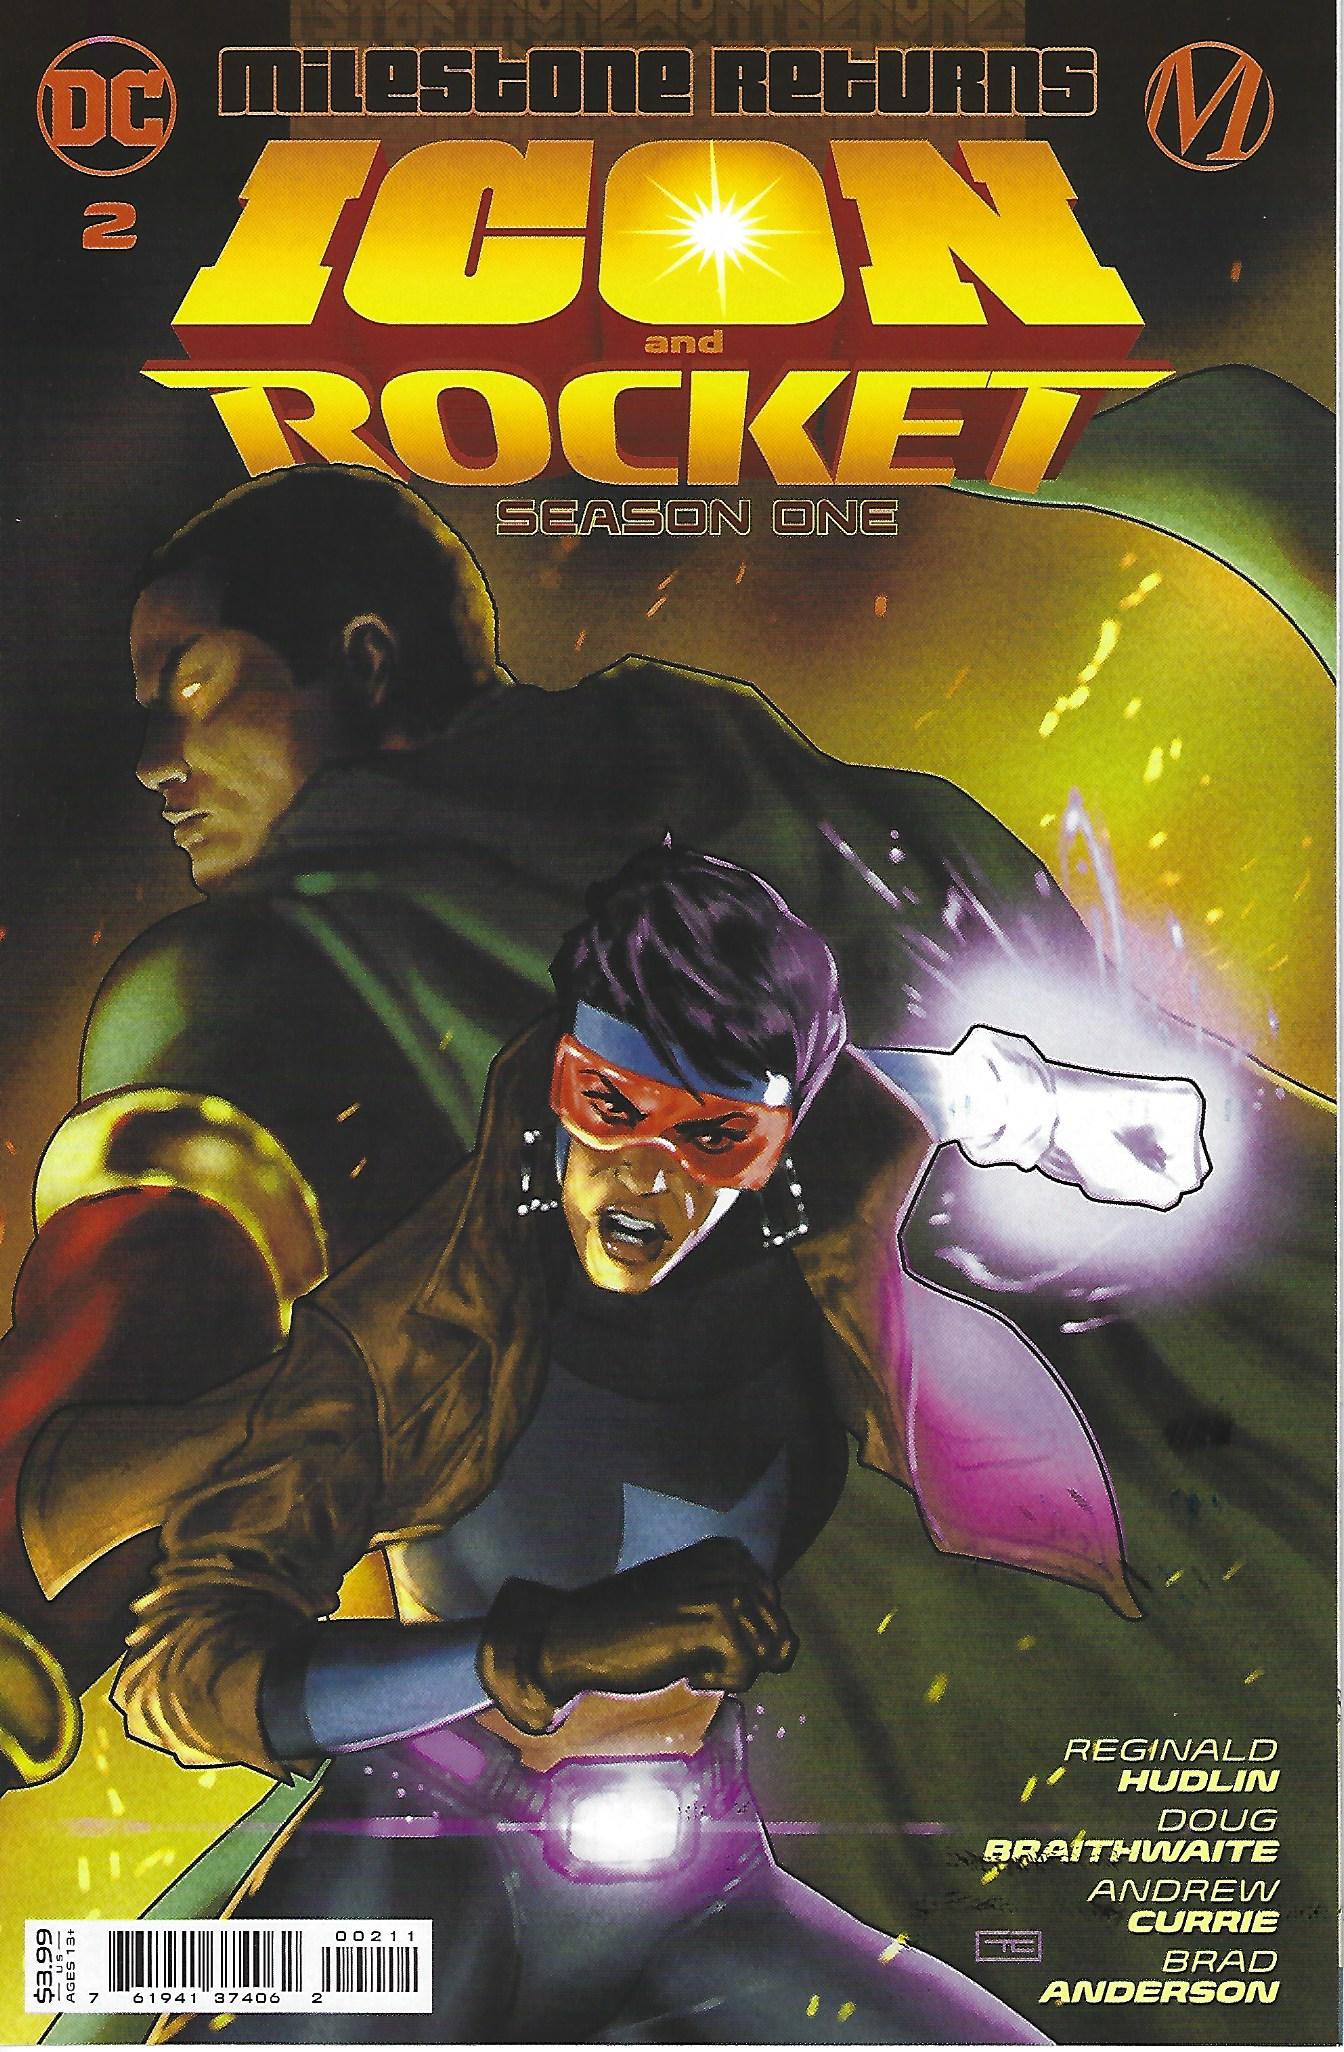 DC & Milestone Comics - Icon & Rocket Season One #2